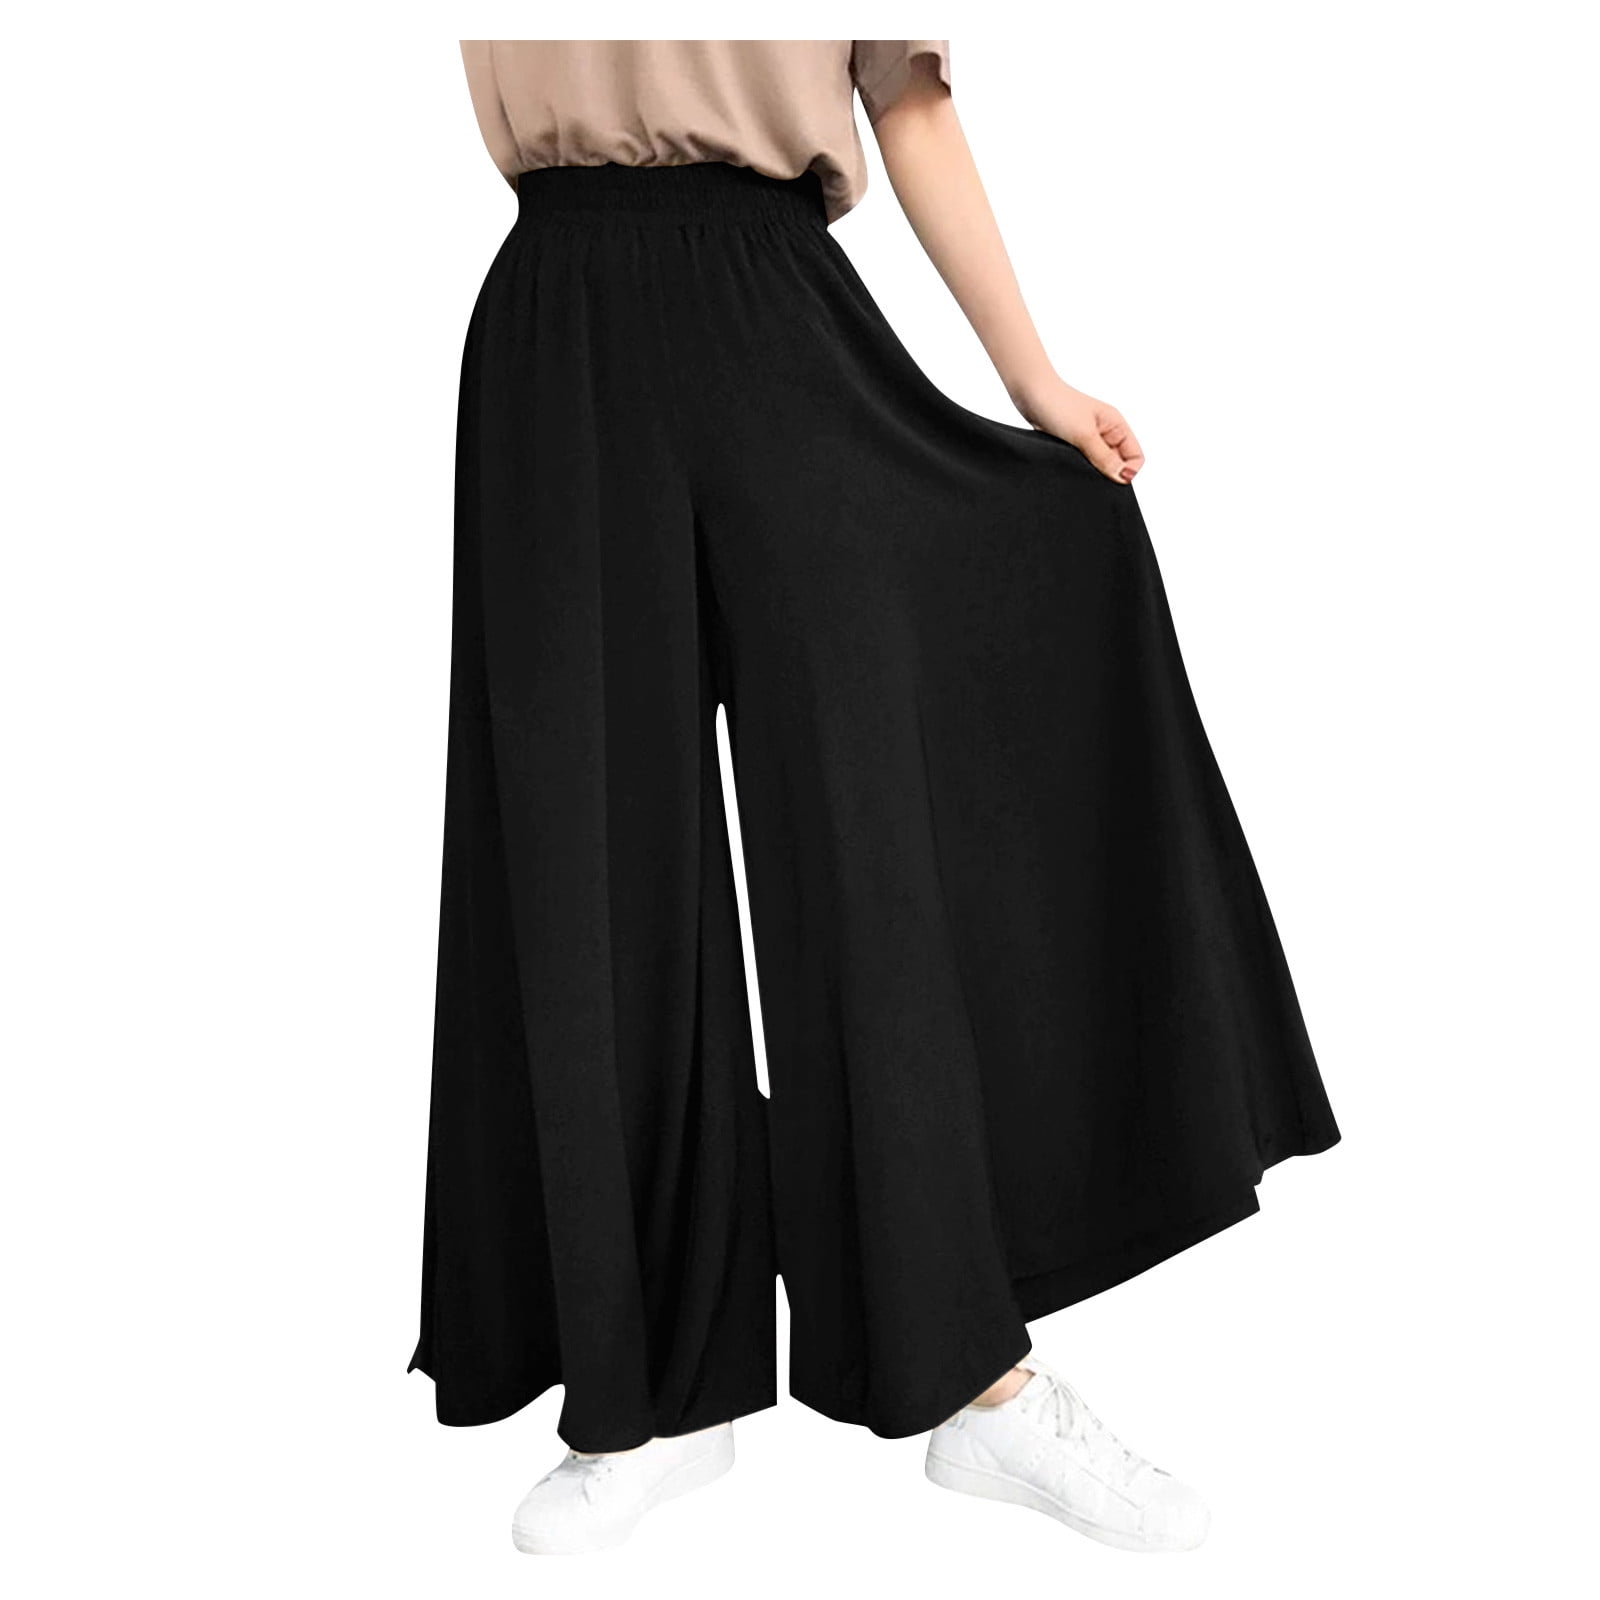 JDEFEG Womens Elastic Belted High Waist Casual Loose Long Pants